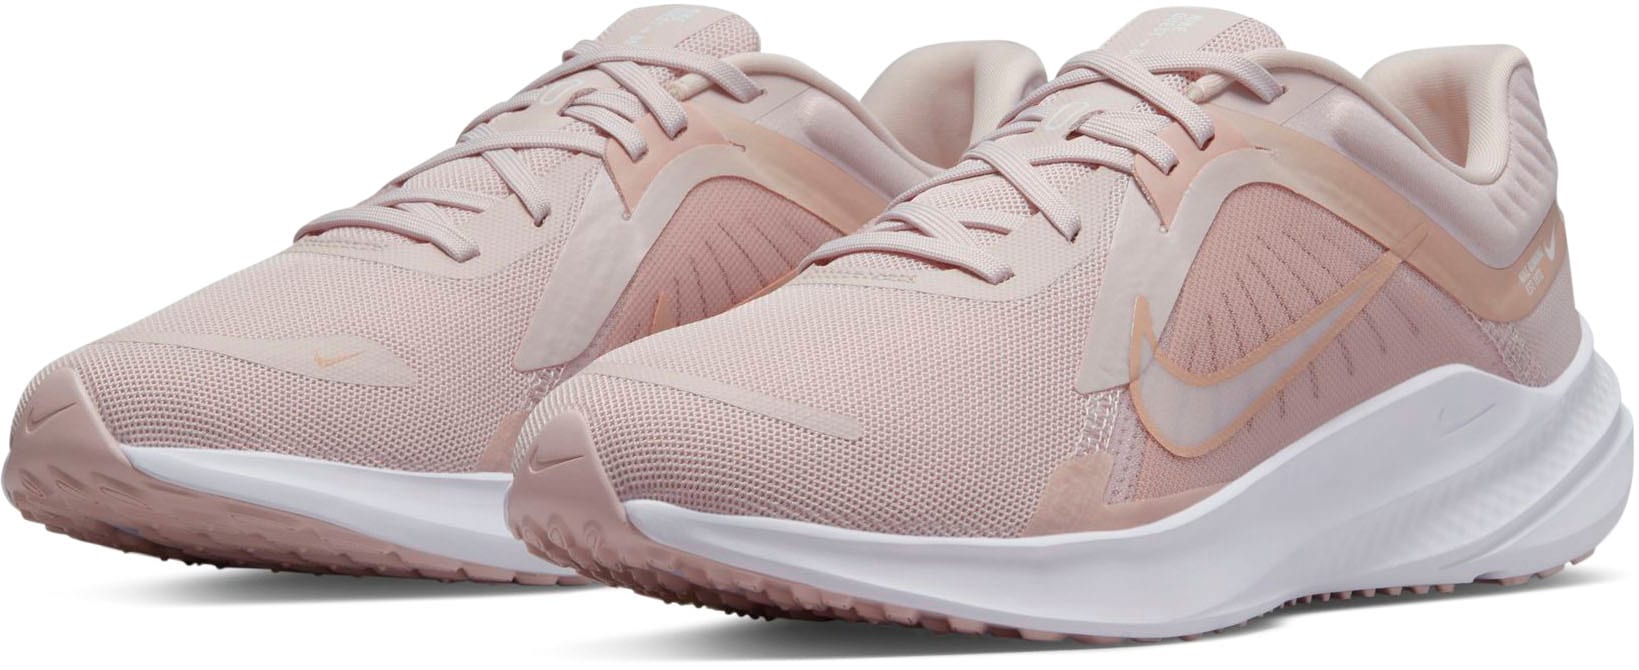 Nike Damenschuhe rosa online bestellen » walking